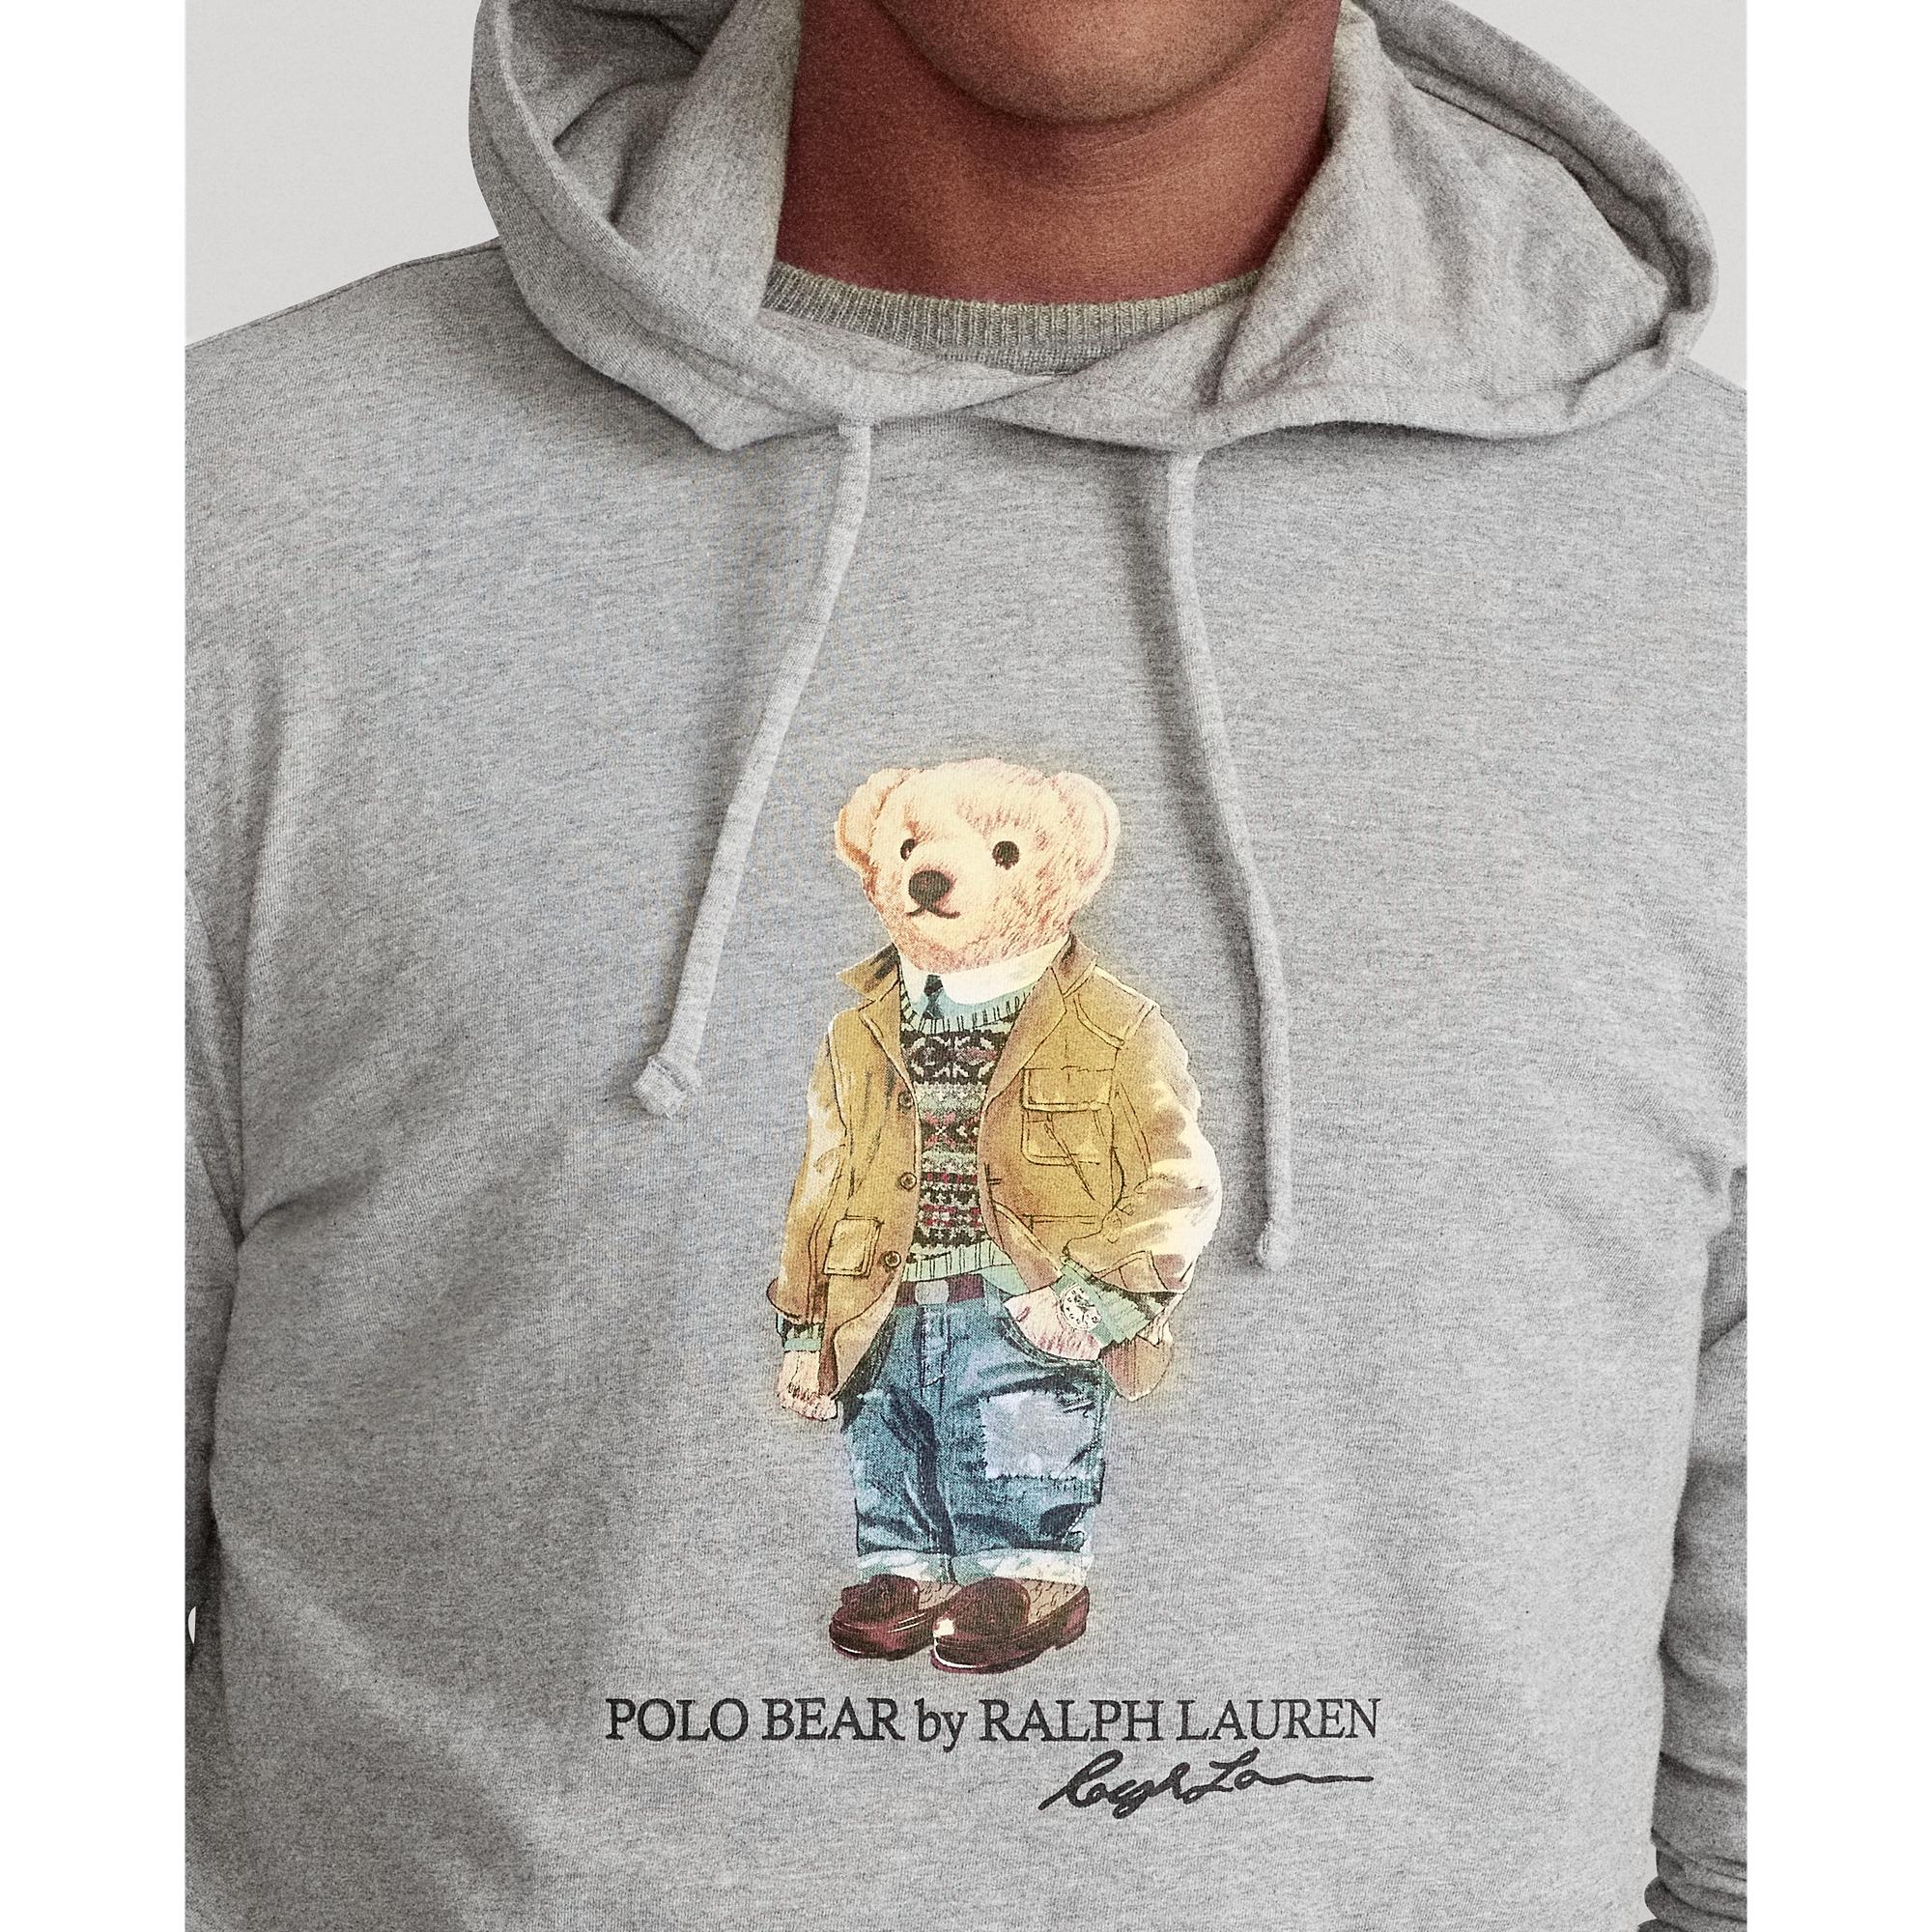 Ralph Lauren Cotton Polo Bear Jersey Hooded T-shirt in Gray for Men - Lyst